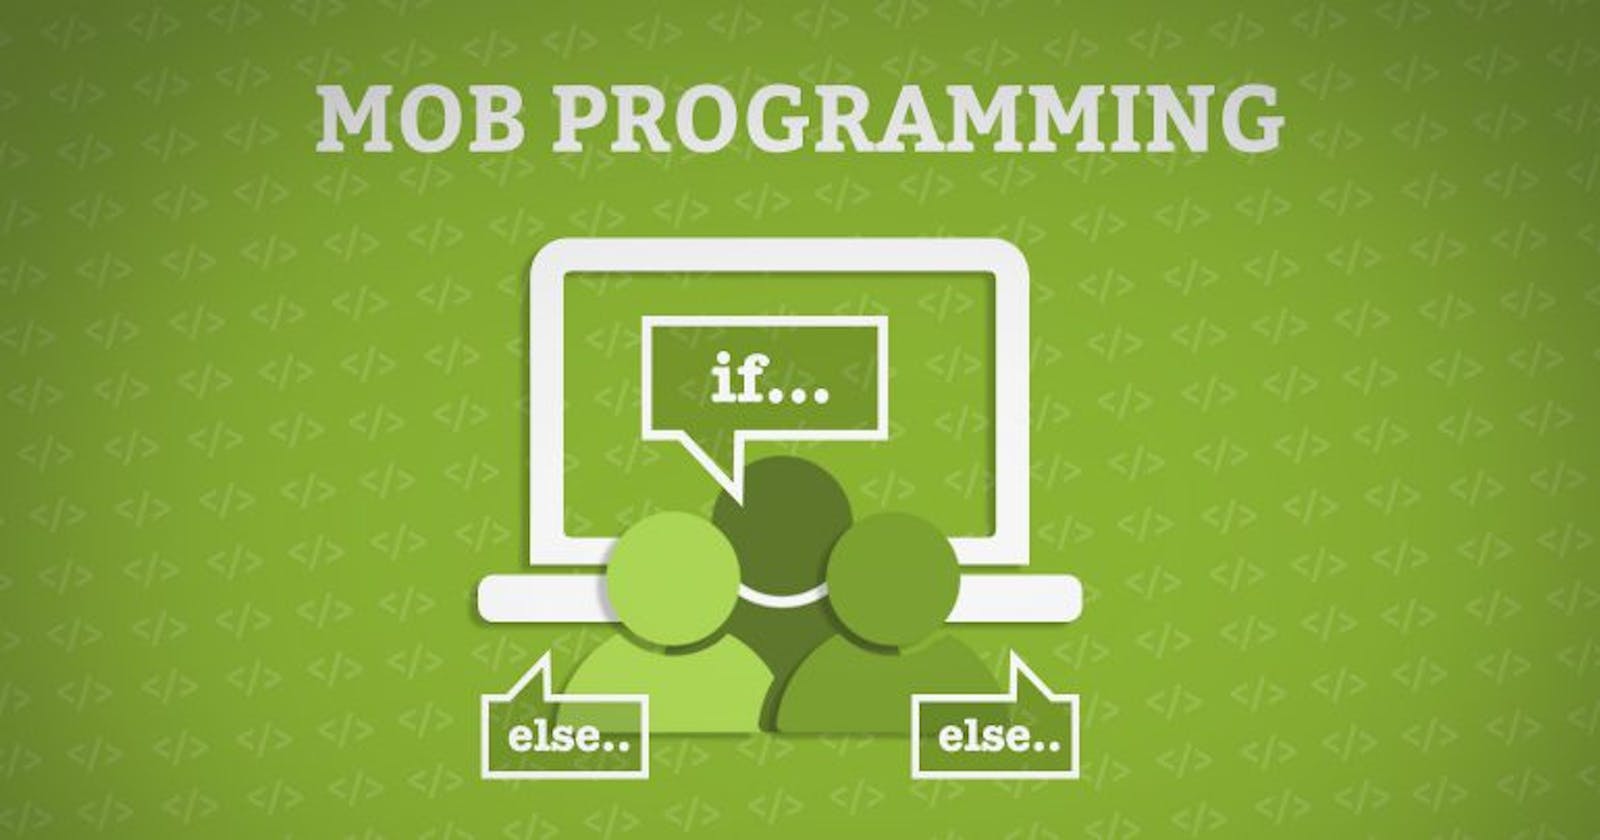 Mob programming basics